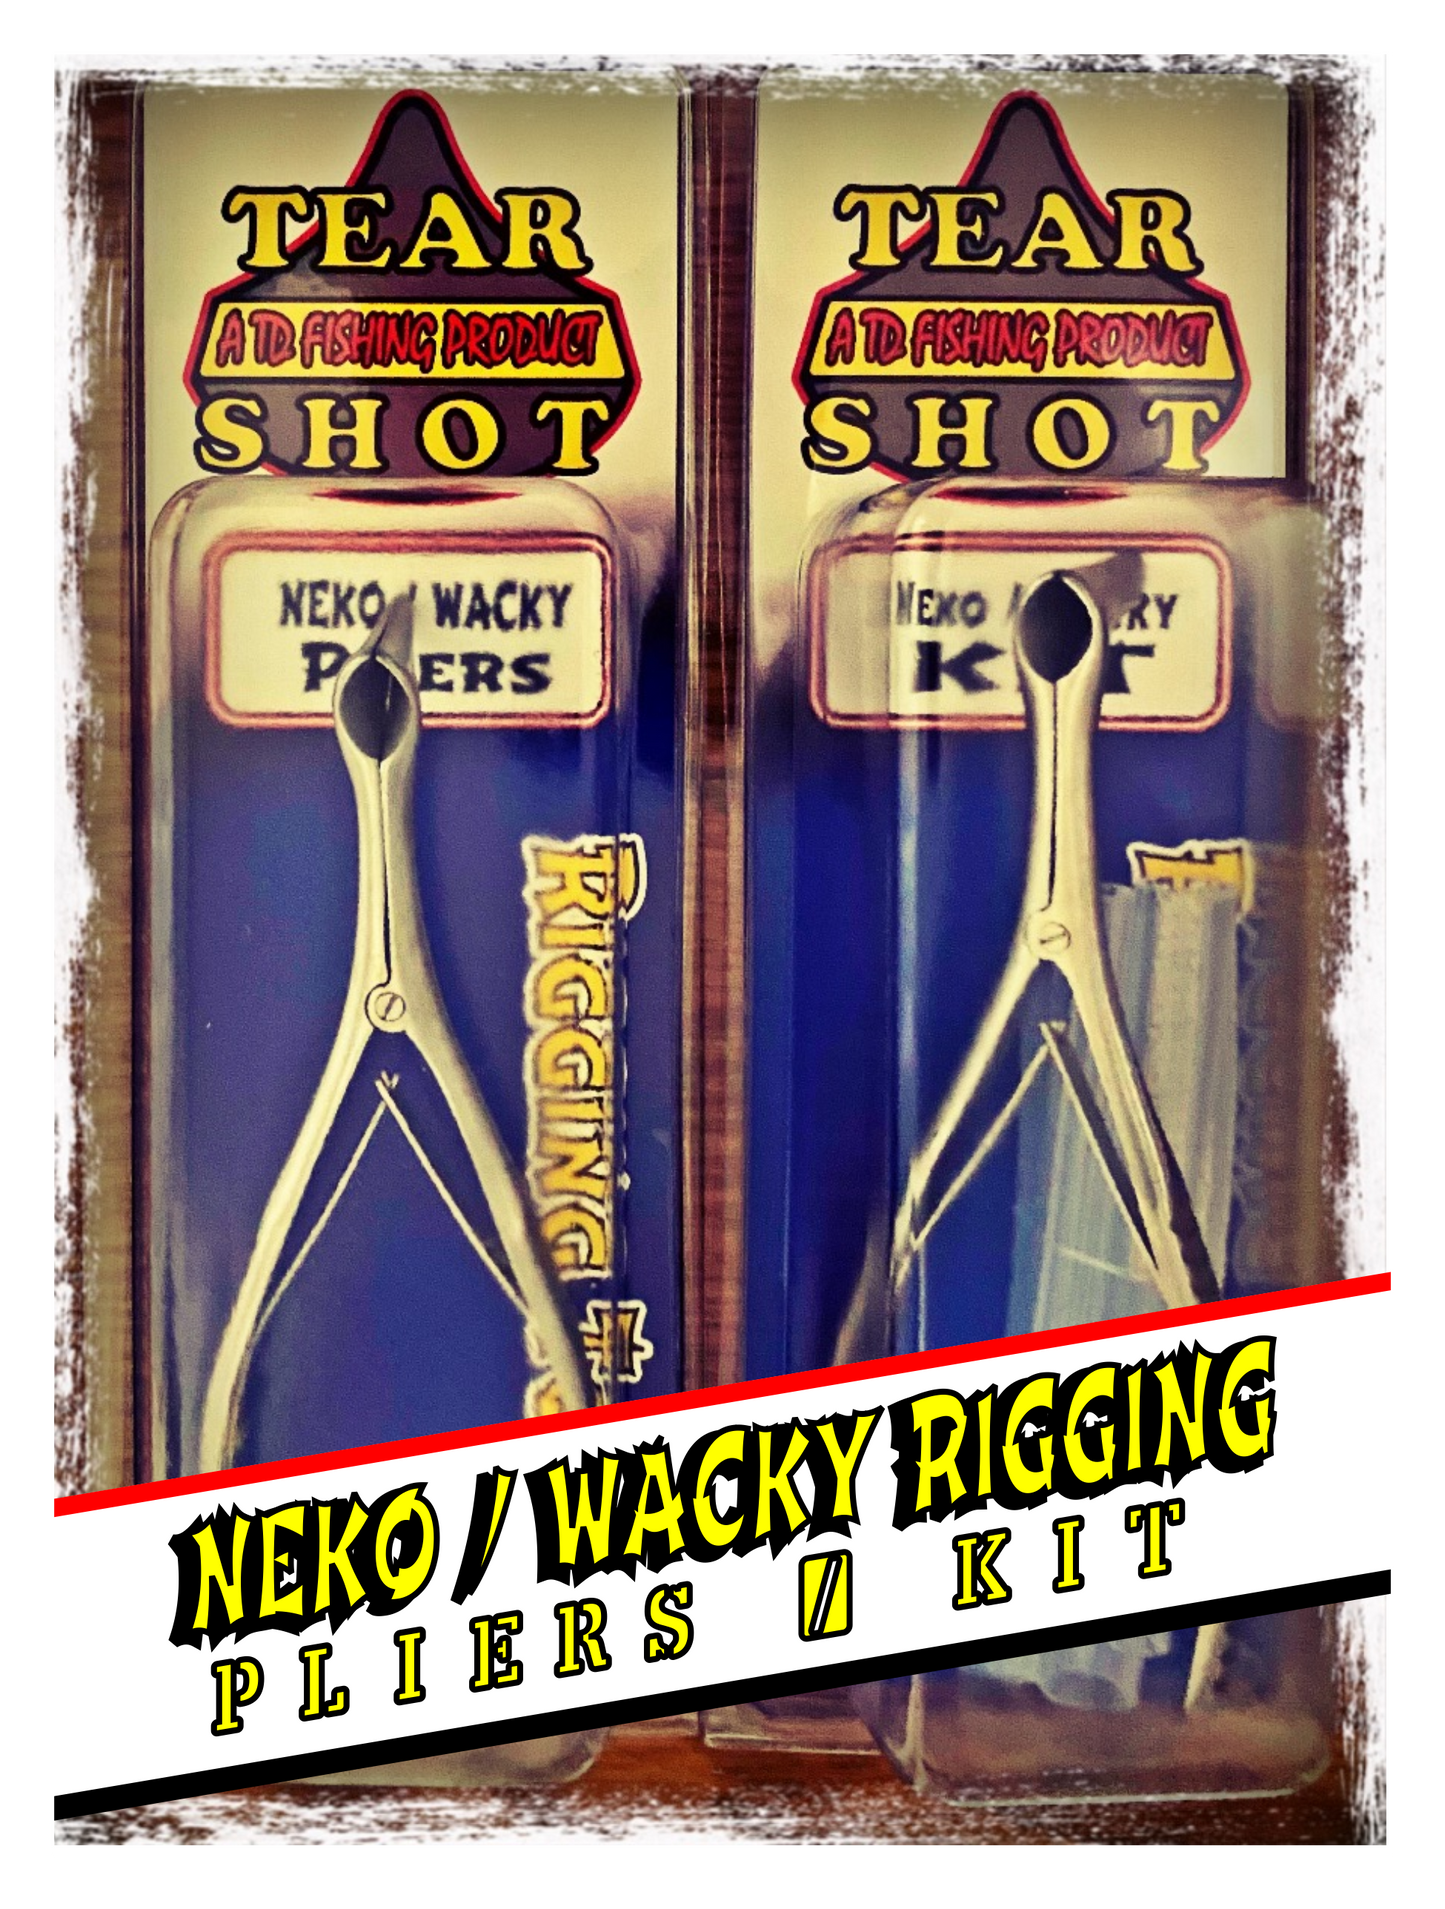 Neko / Wacky Rigging Tool - Pliers or Kit